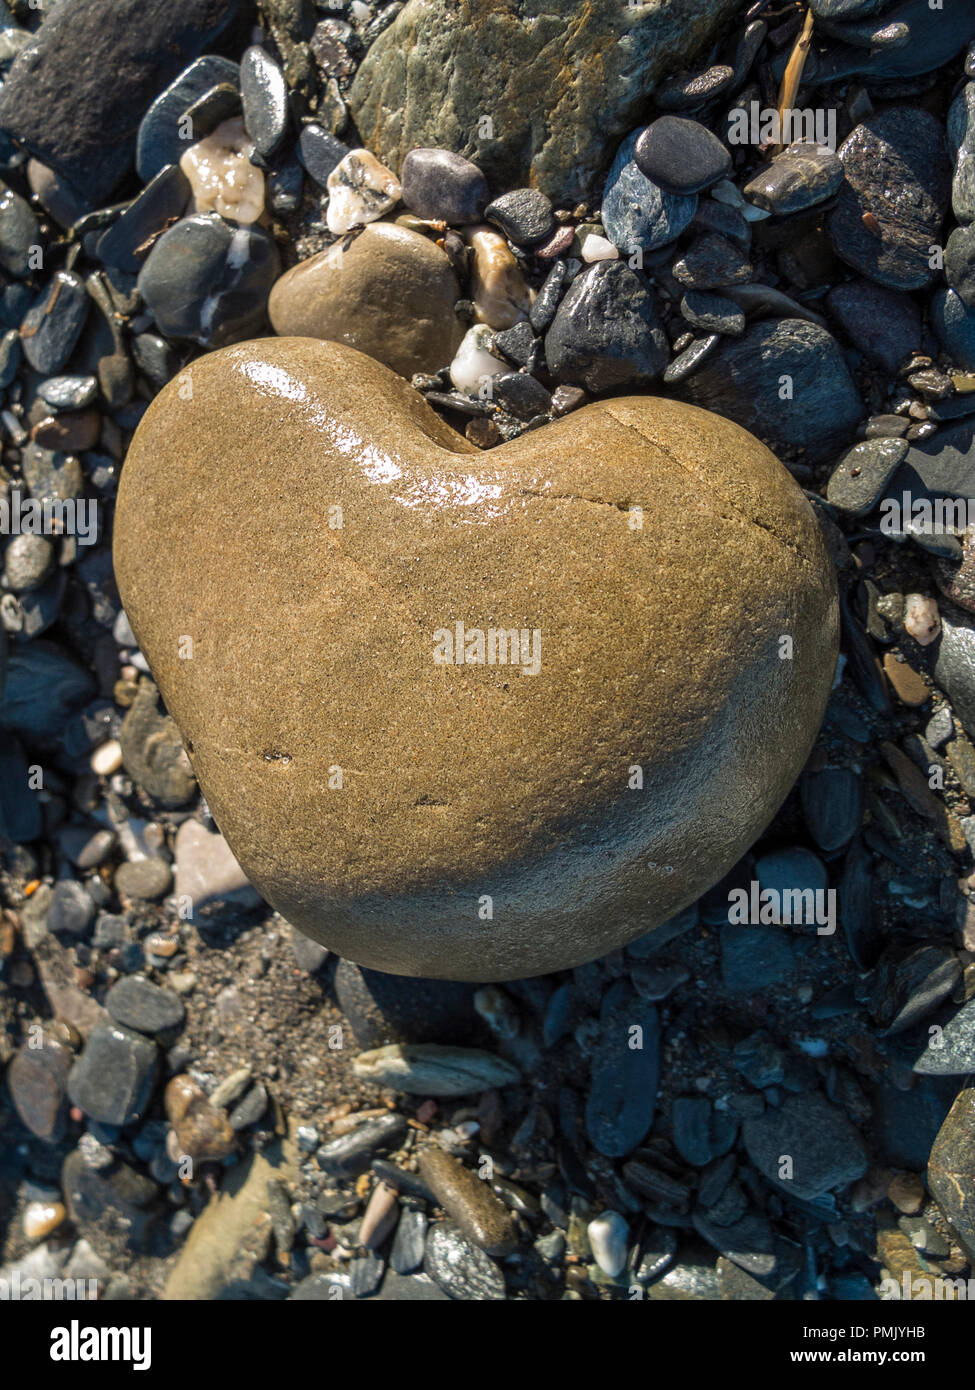 Heart shaped stone found on a rocky beach near the shore of the mediterranean sea Stock Photo